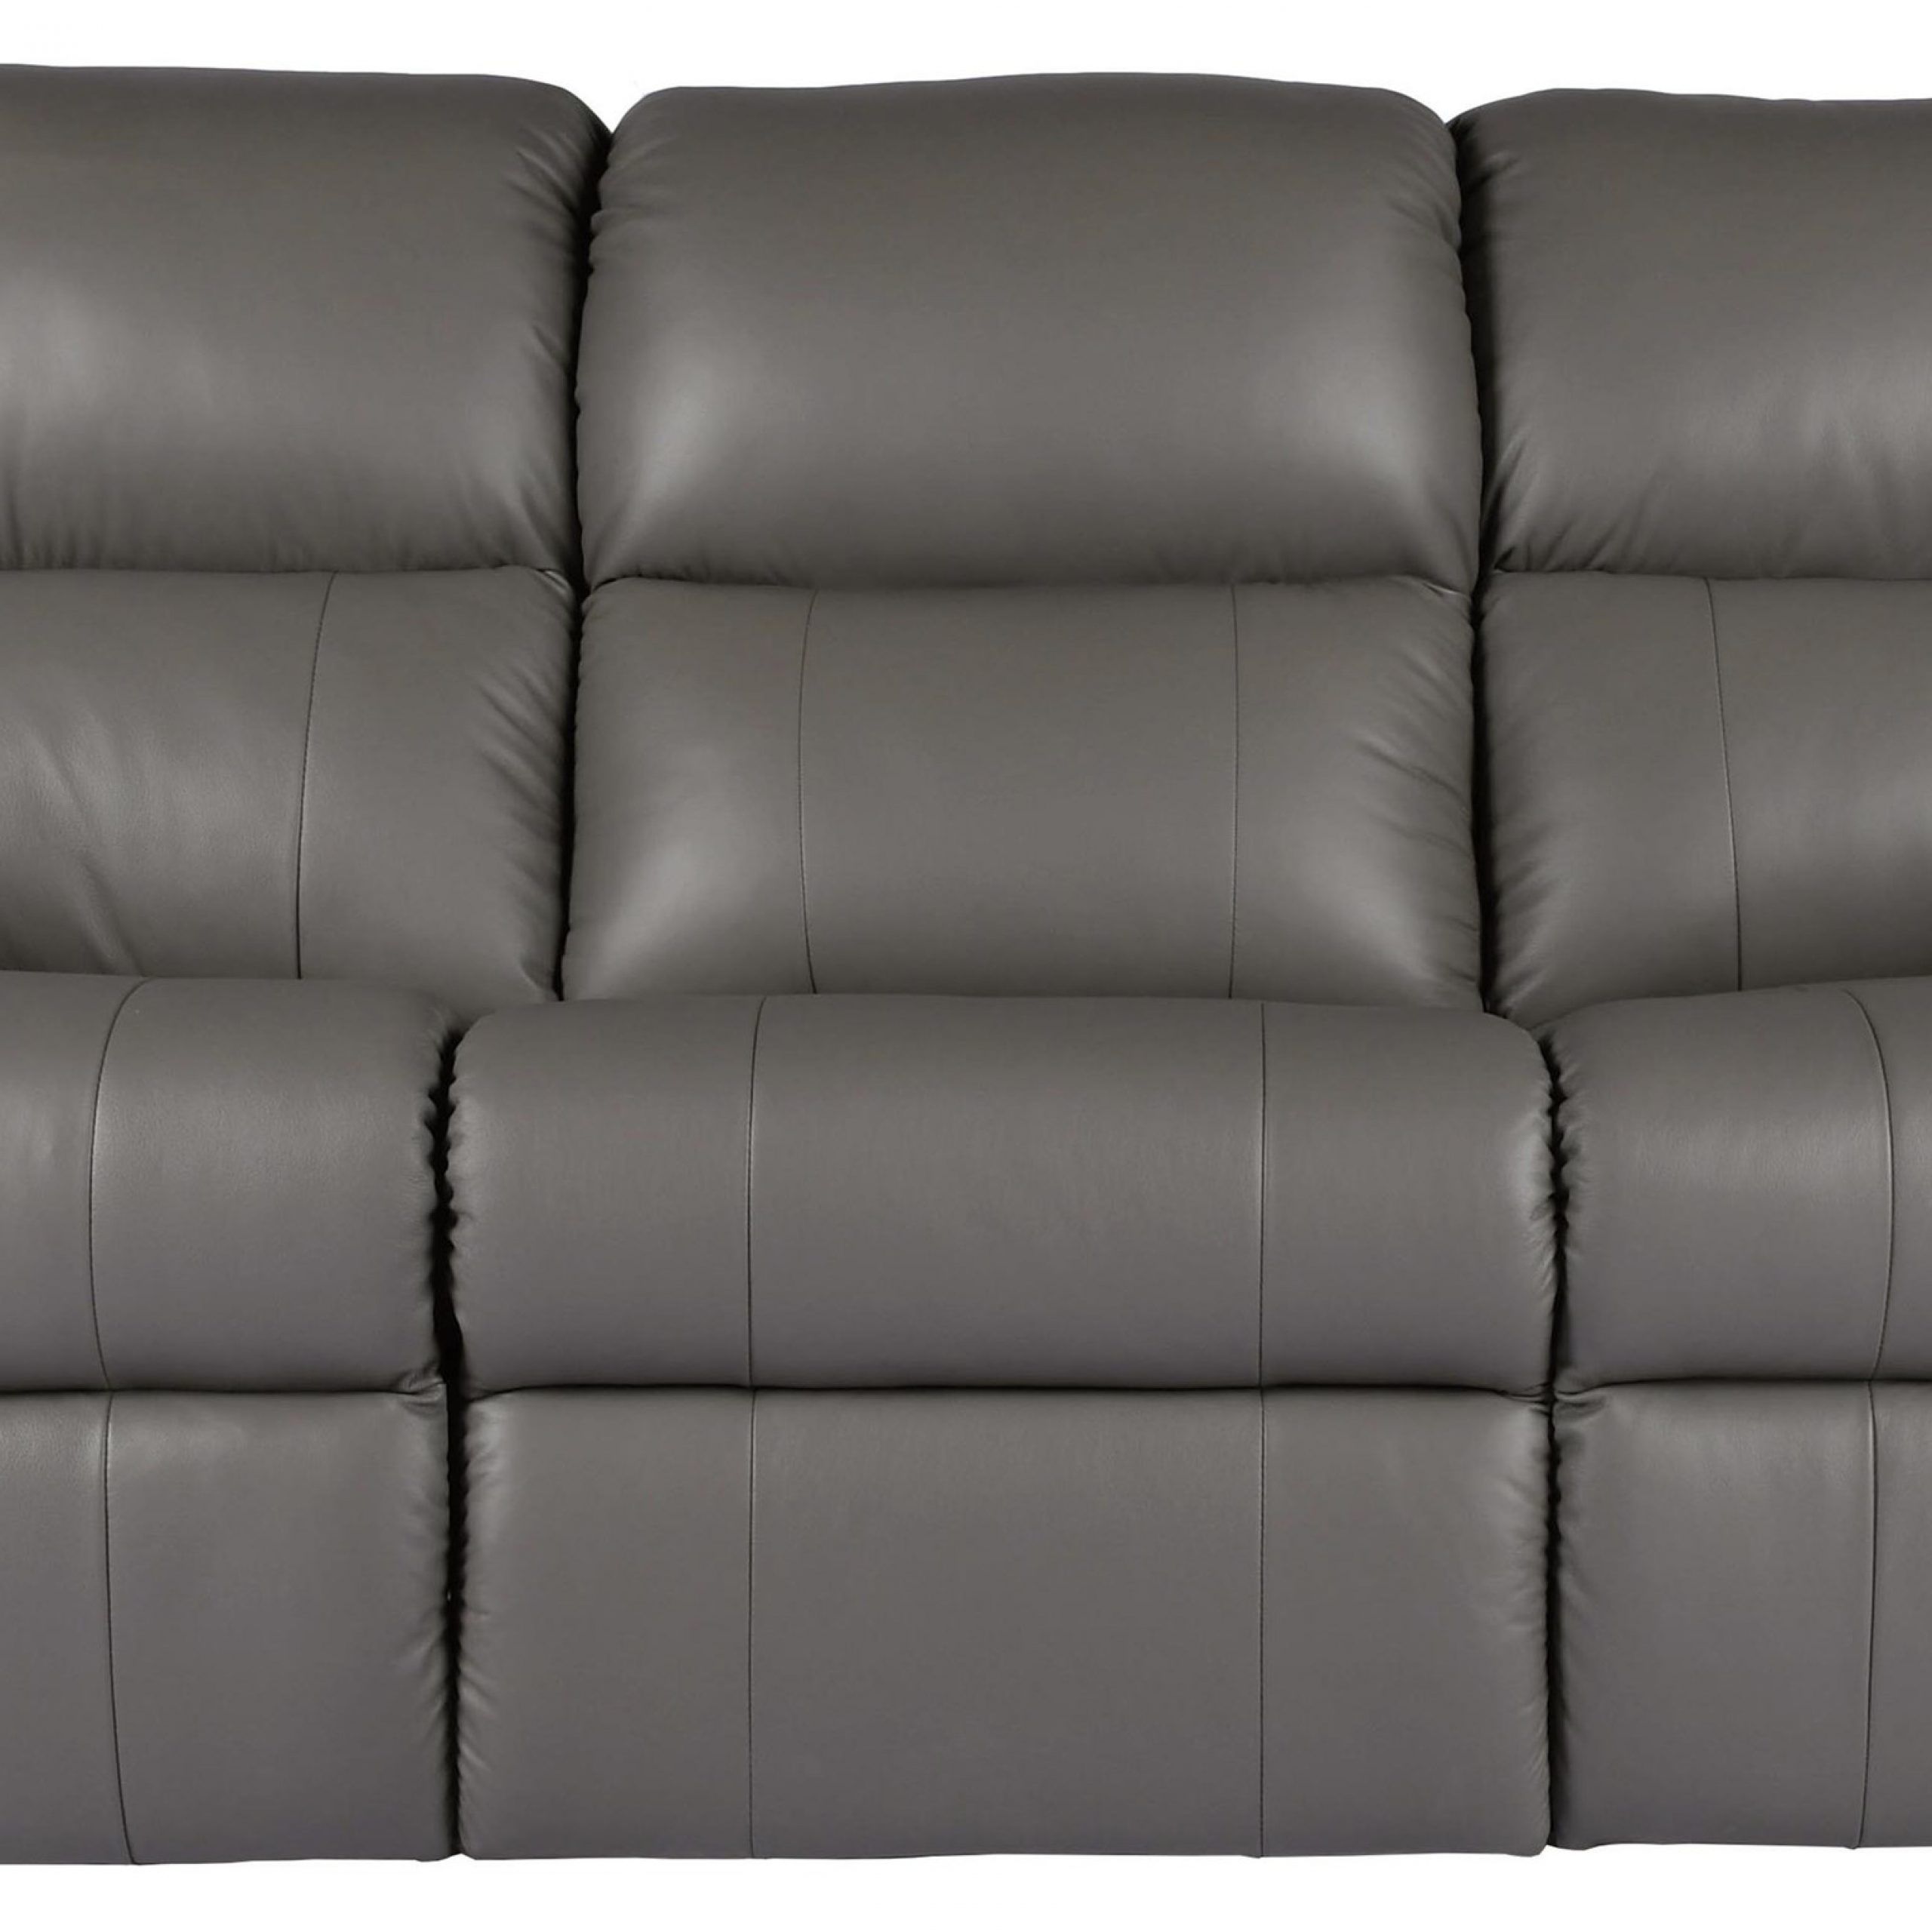 Rockwood Burleigh Power Reclining Sofa With Pillow Arms With Bennett Power Reclining Sofas (View 14 of 15)